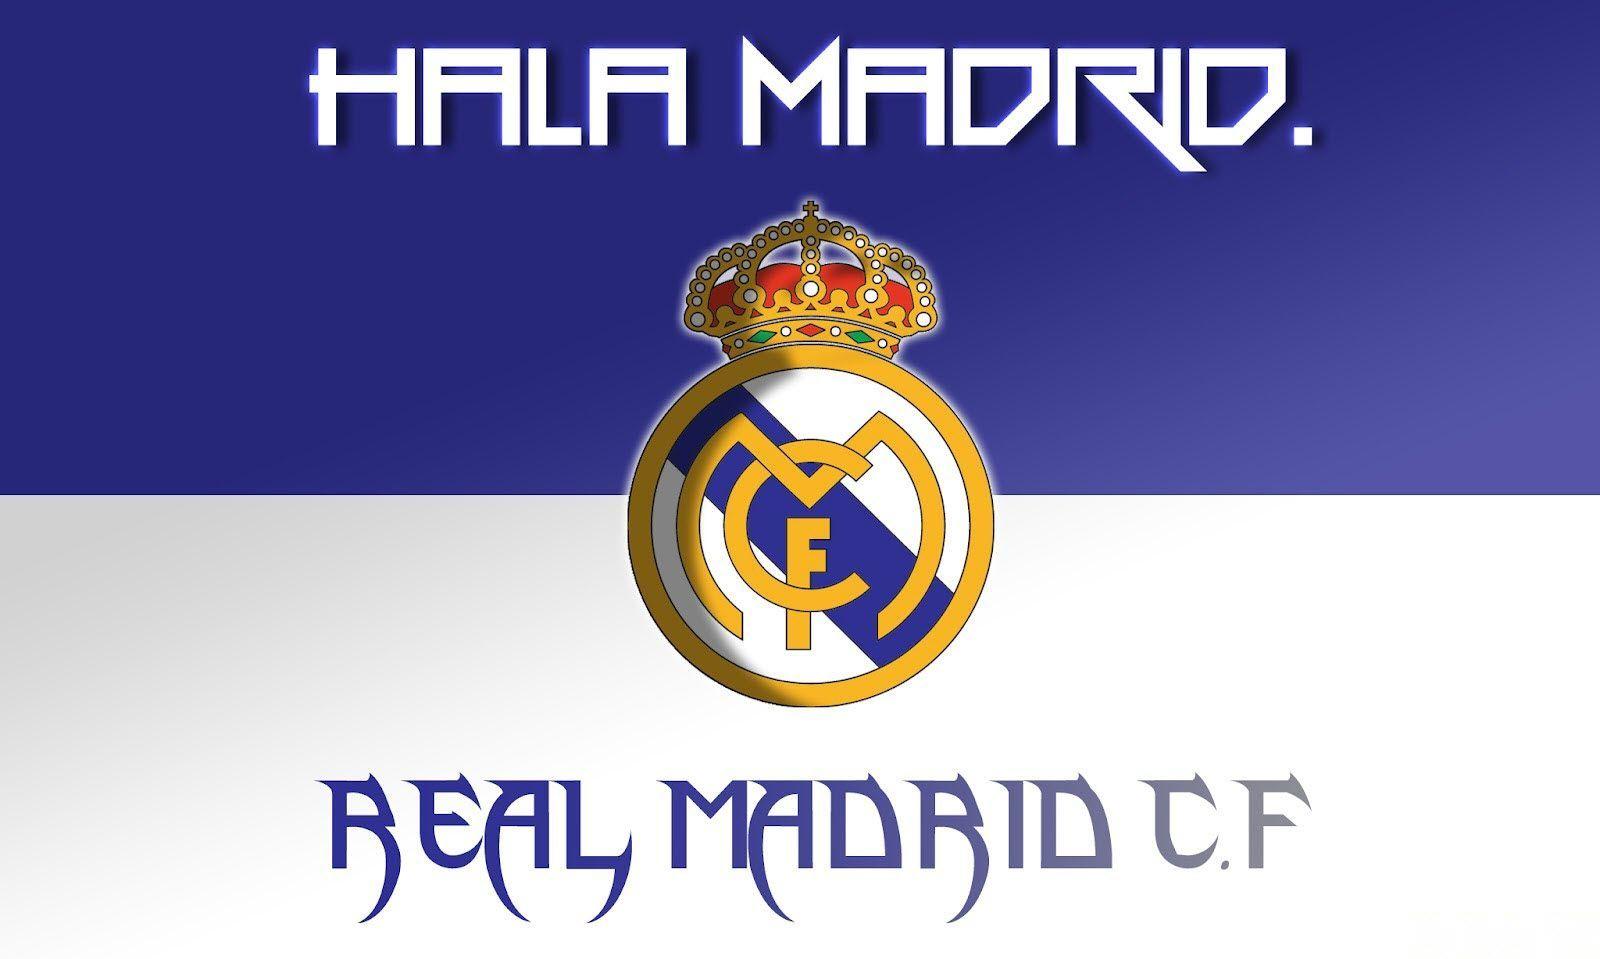 Real Madrid Logo 2016 Football Club. Wallpaper, Background